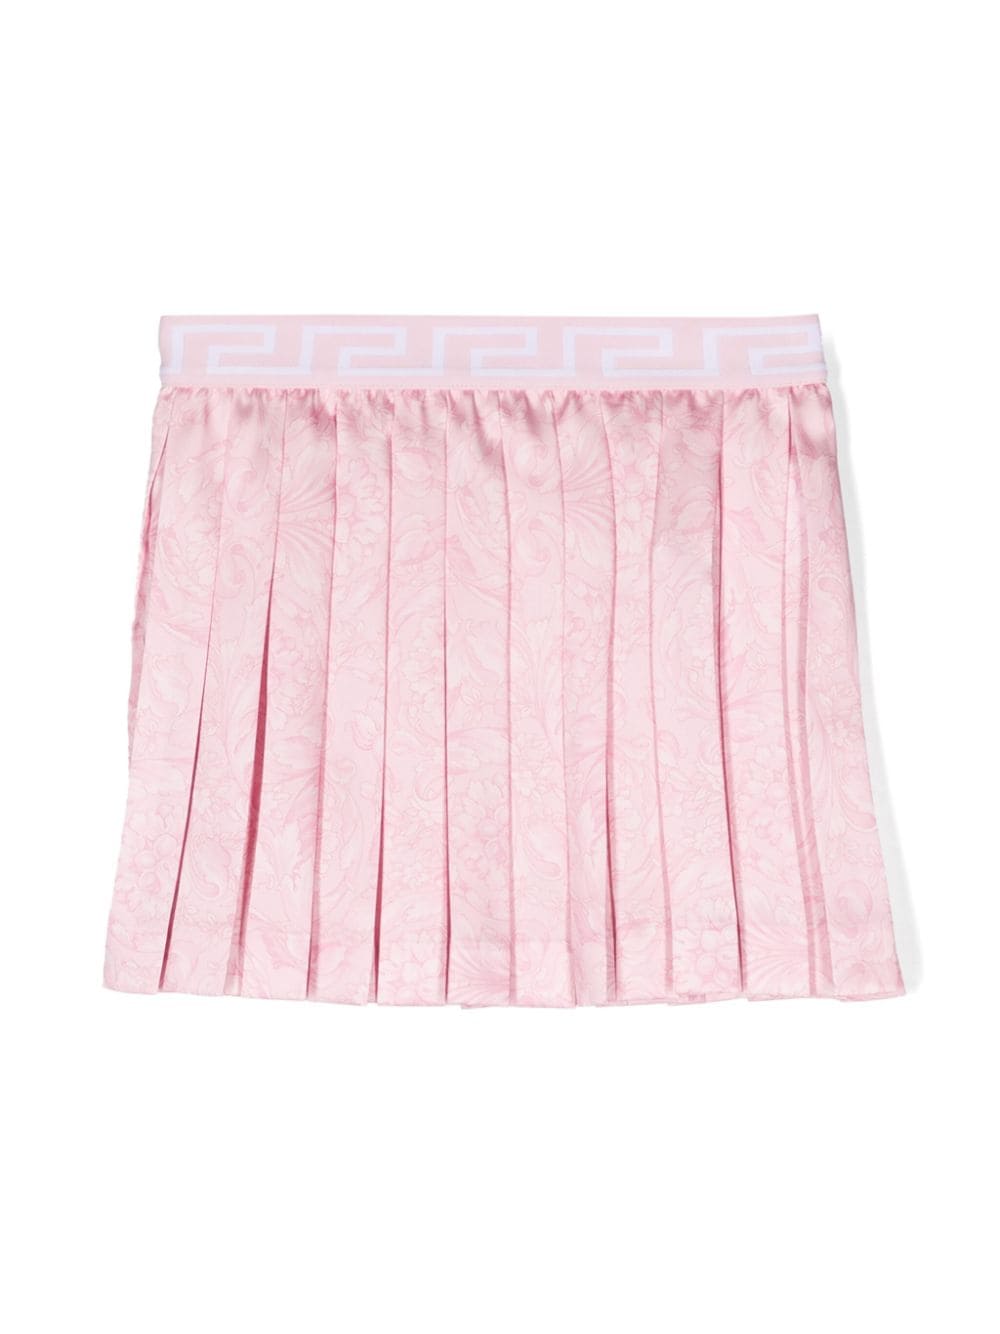 Barocco-print pleated skirt<BR/><BR/><BR/><BR/>